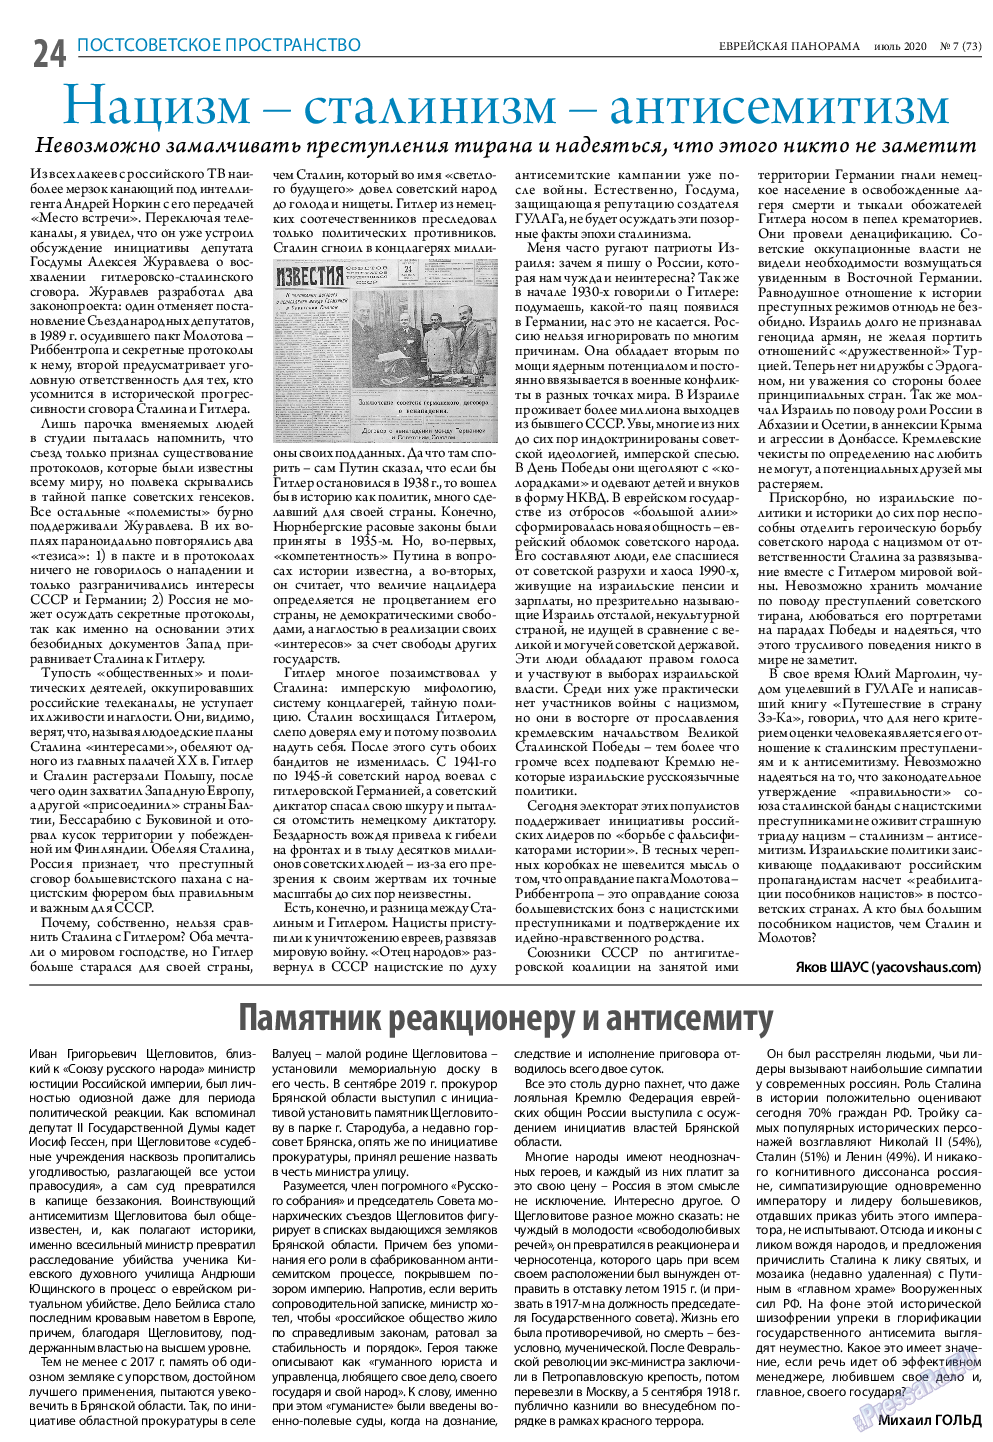 Еврейская панорама, газета. 2020 №7 стр.24